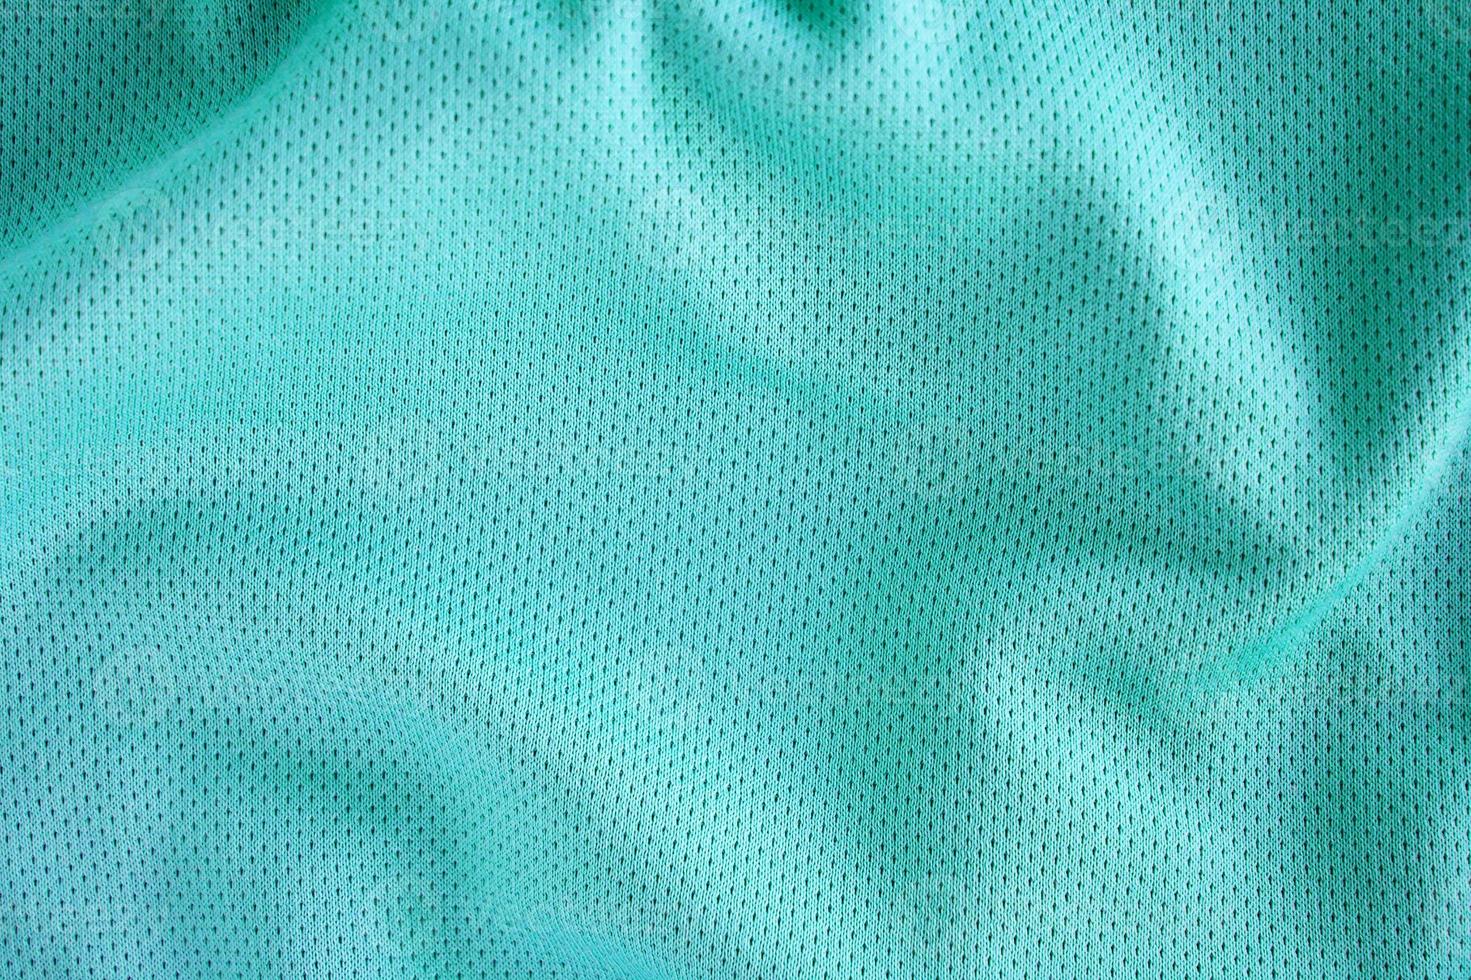 sportkläder tyg textur bakgrund, ovanifrån av tyg textil yta foto